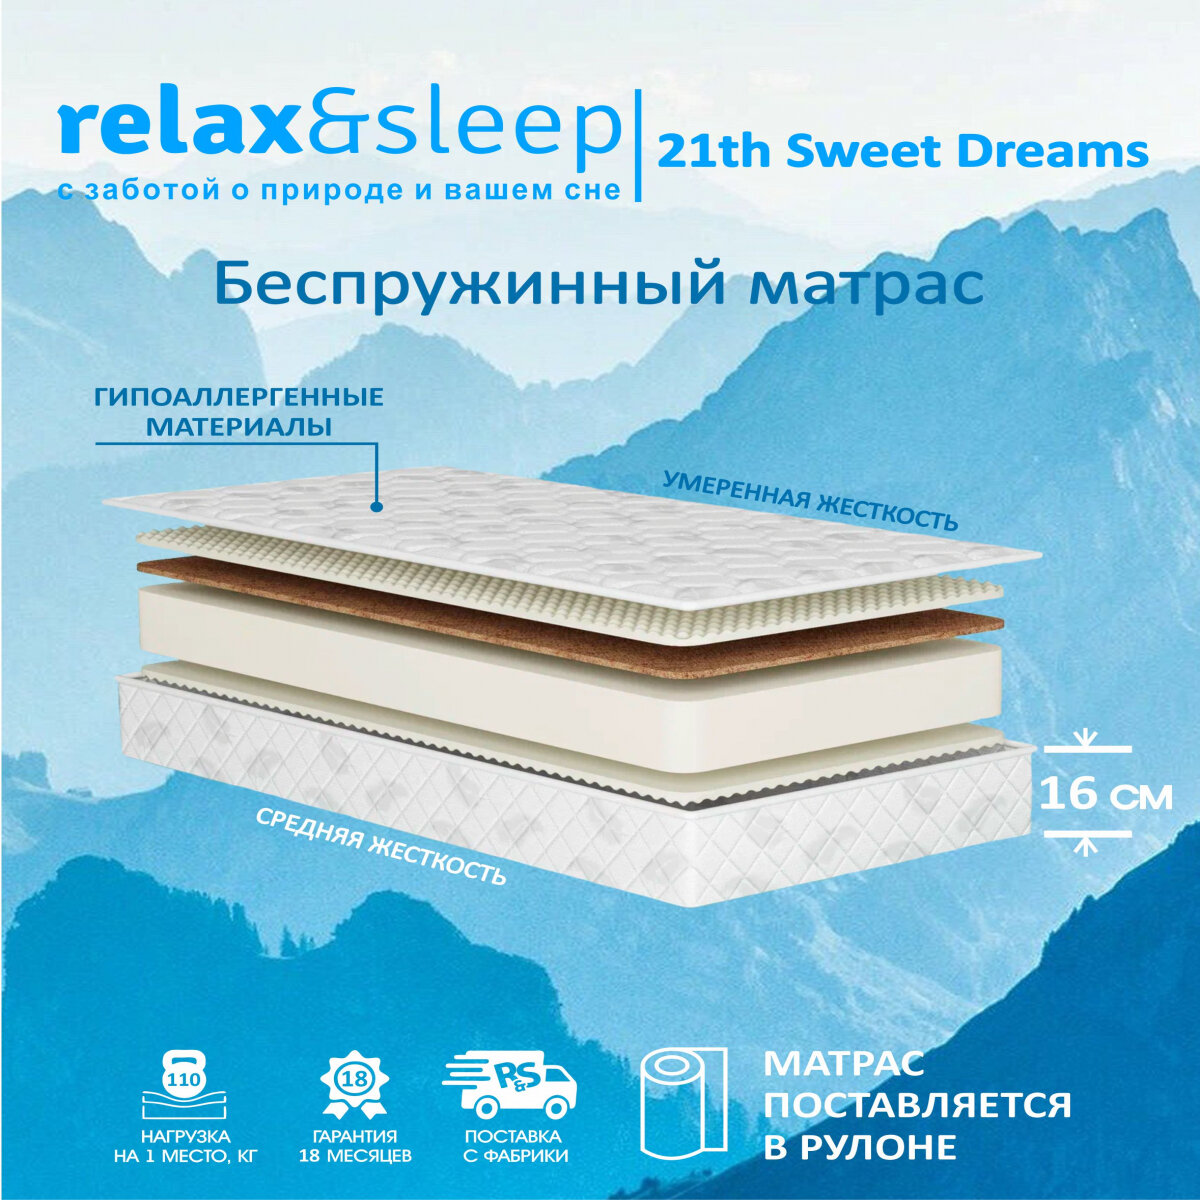 Матрас Relax&Sleep ортопедический беспружинный 21th Sweet Dreams (110 / 200)